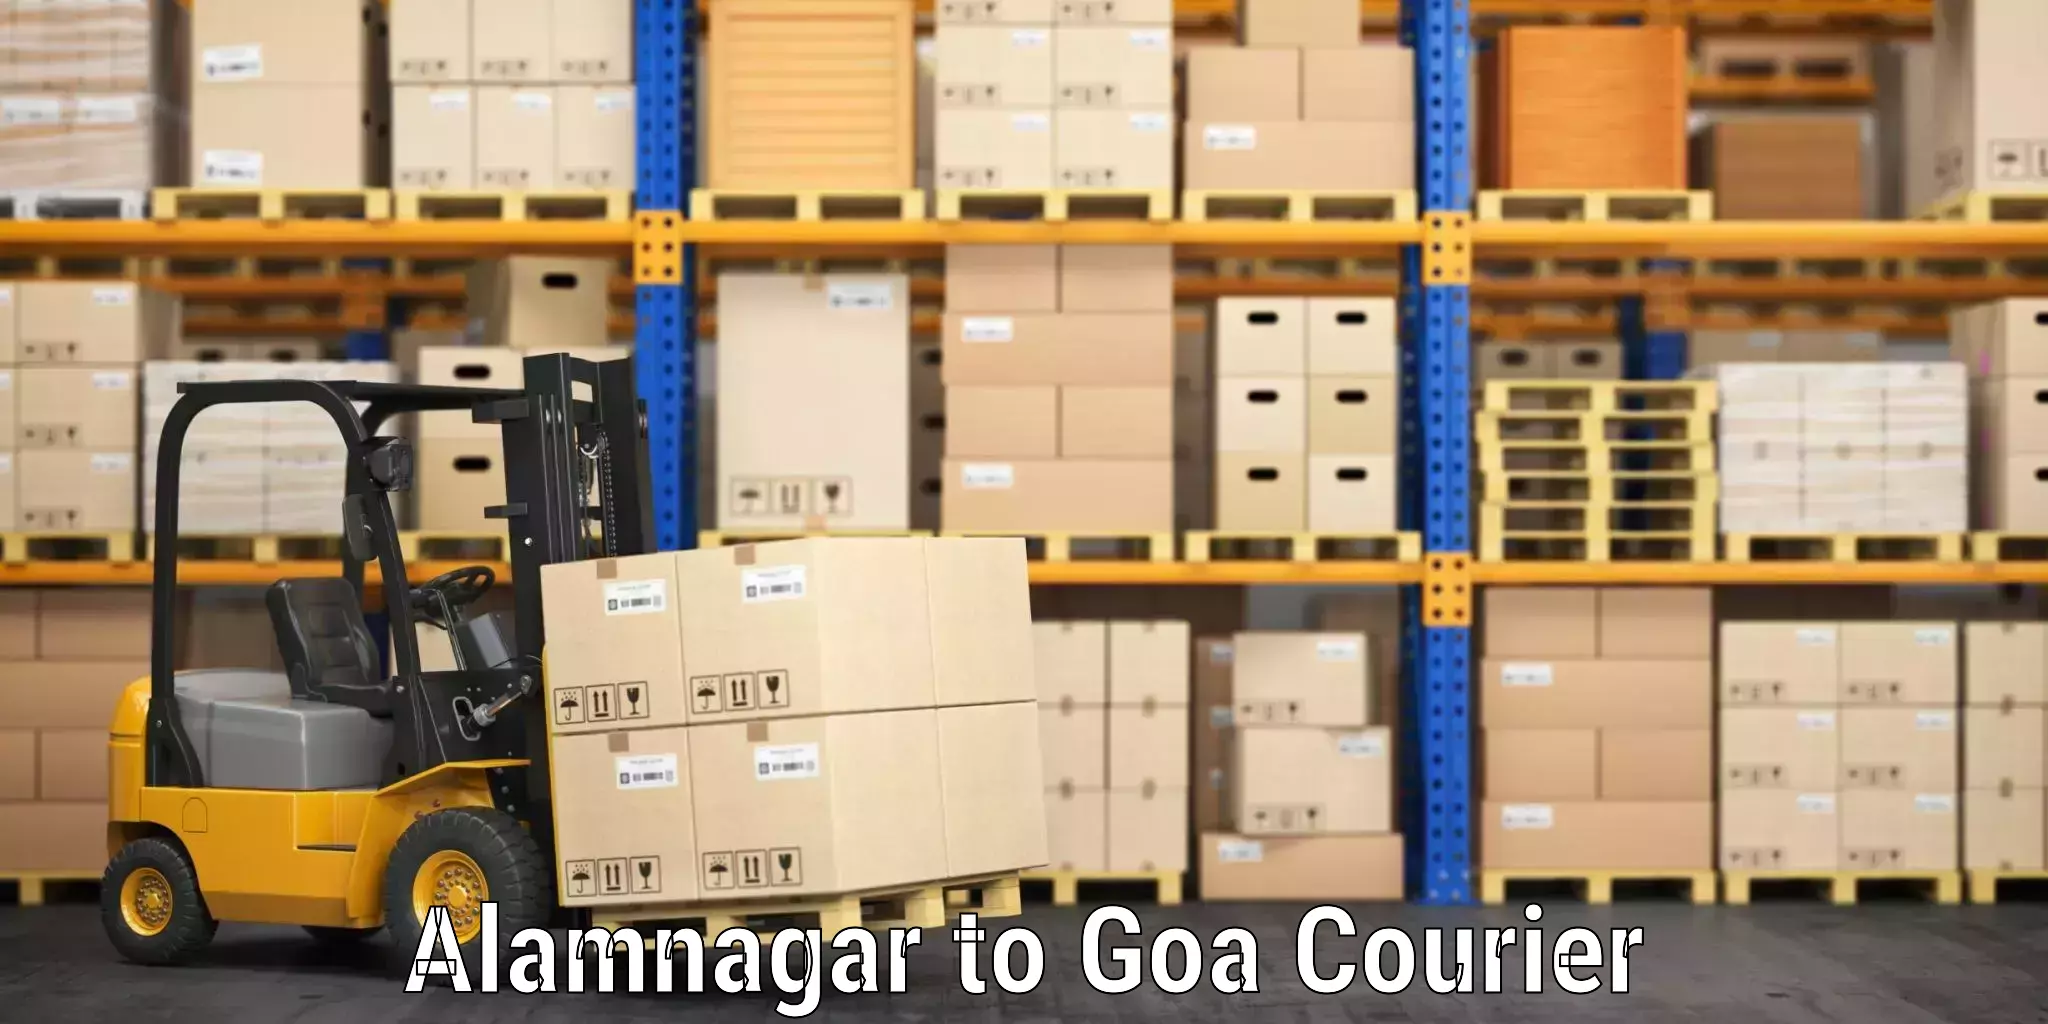 Baggage transport professionals Alamnagar to South Goa